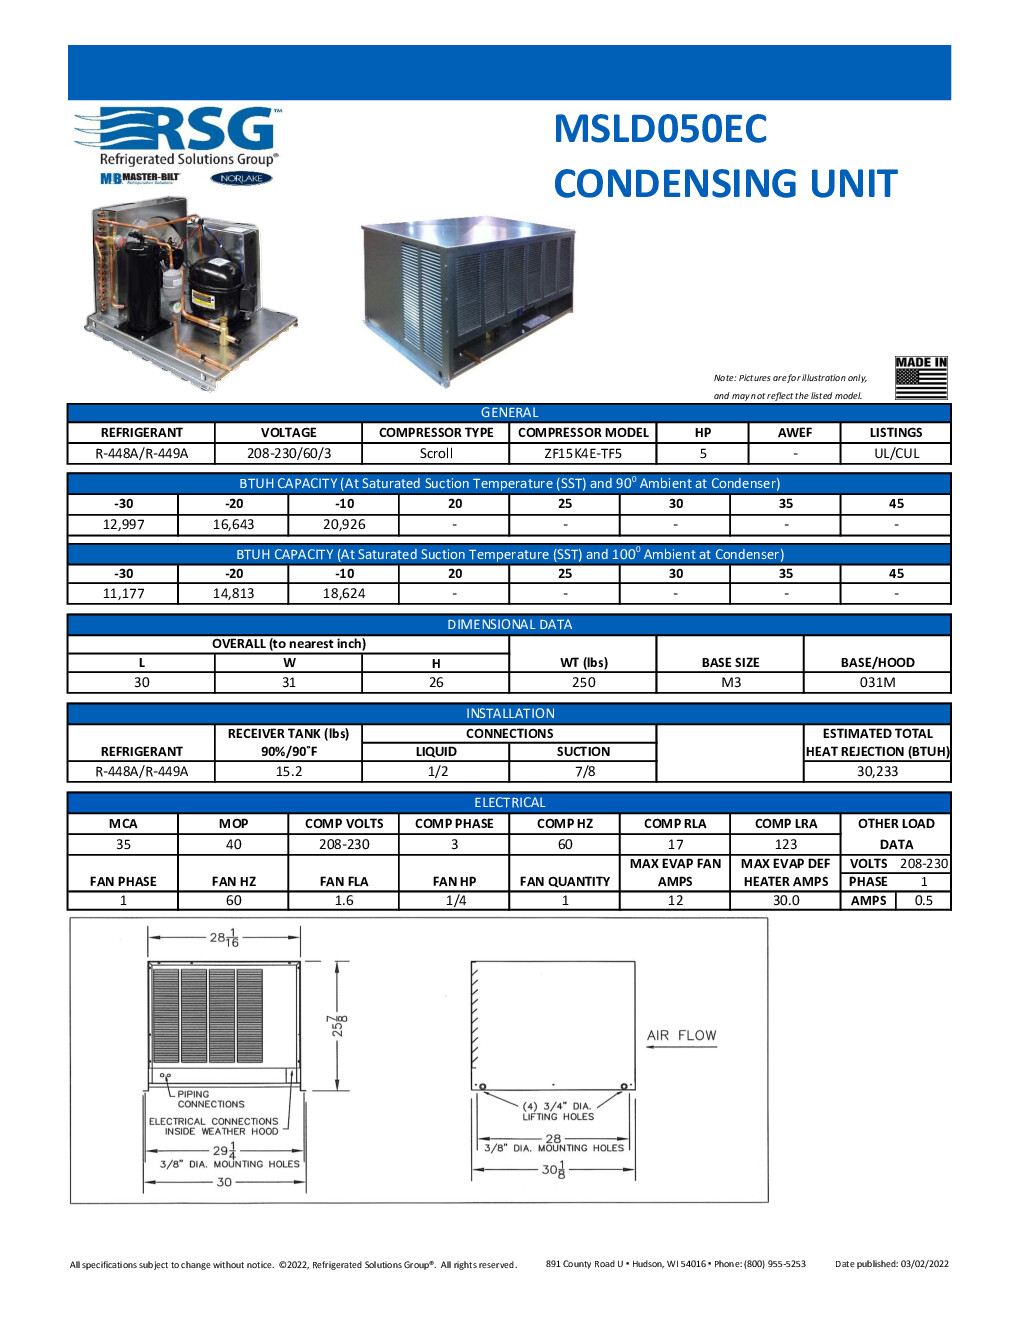 Master-Bilt MSLD050EC Remote Low Temp Scroll Condensing Unit, 5 HP, 208-230v/60/3-ph